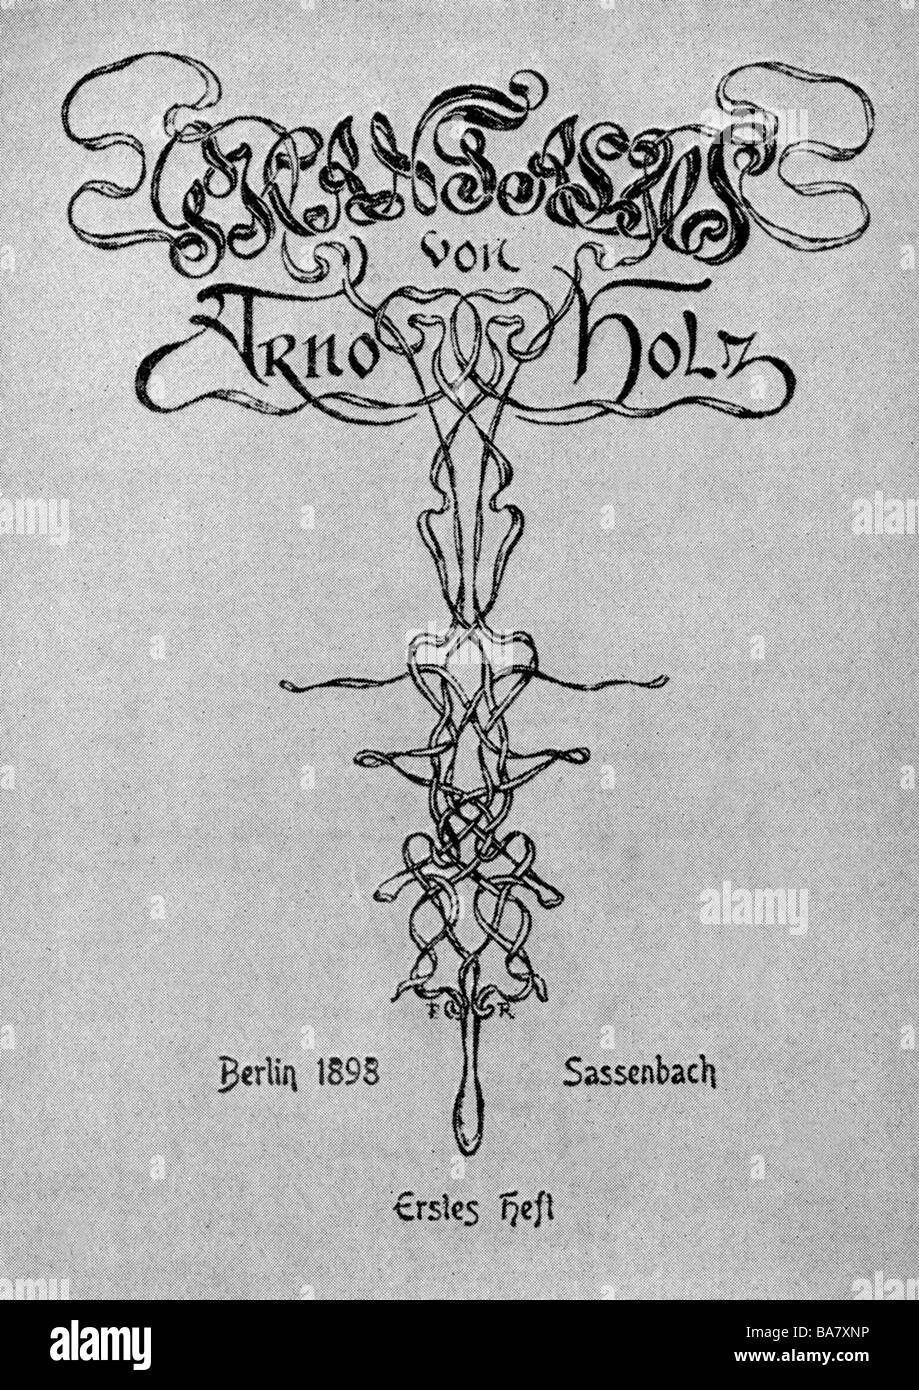 Holz, Arno, 26.4.1863 - 26.10.1929, German author / writer,  work 'Phantastus', first edition, cover, Sassenbach Verlag, Berlin, 1898, Stock Photo